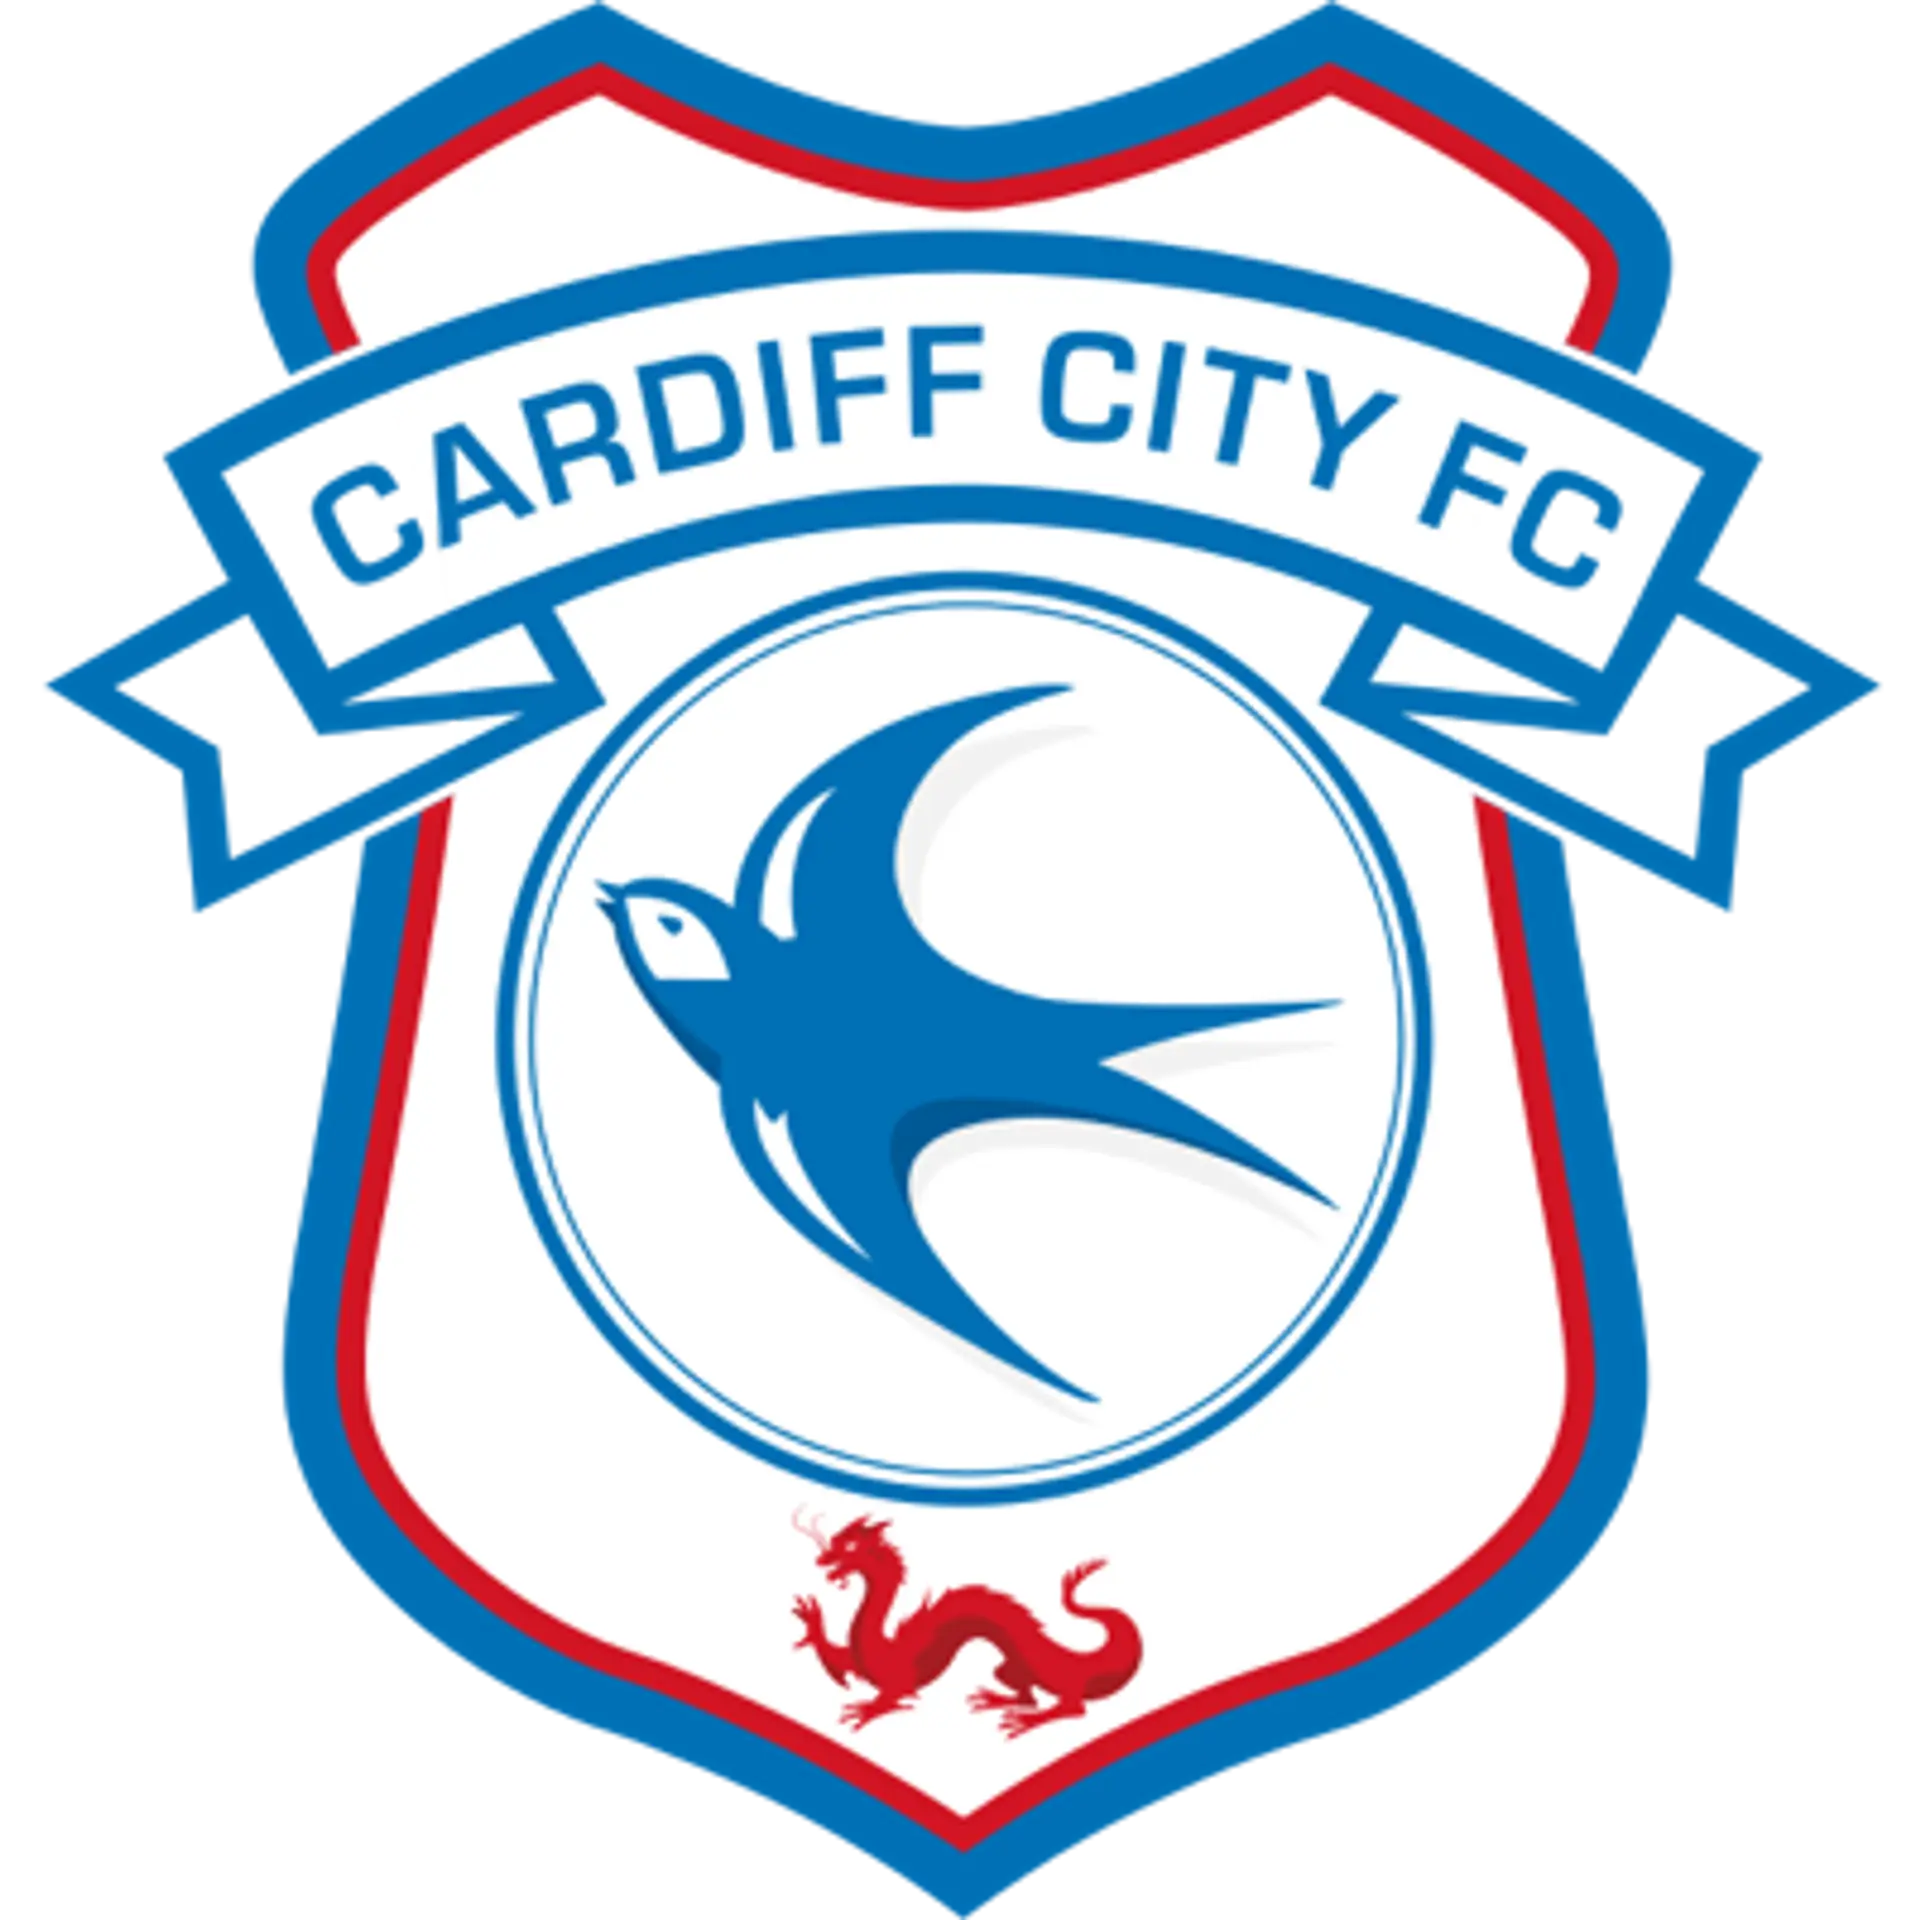 Cardiff City Squadra